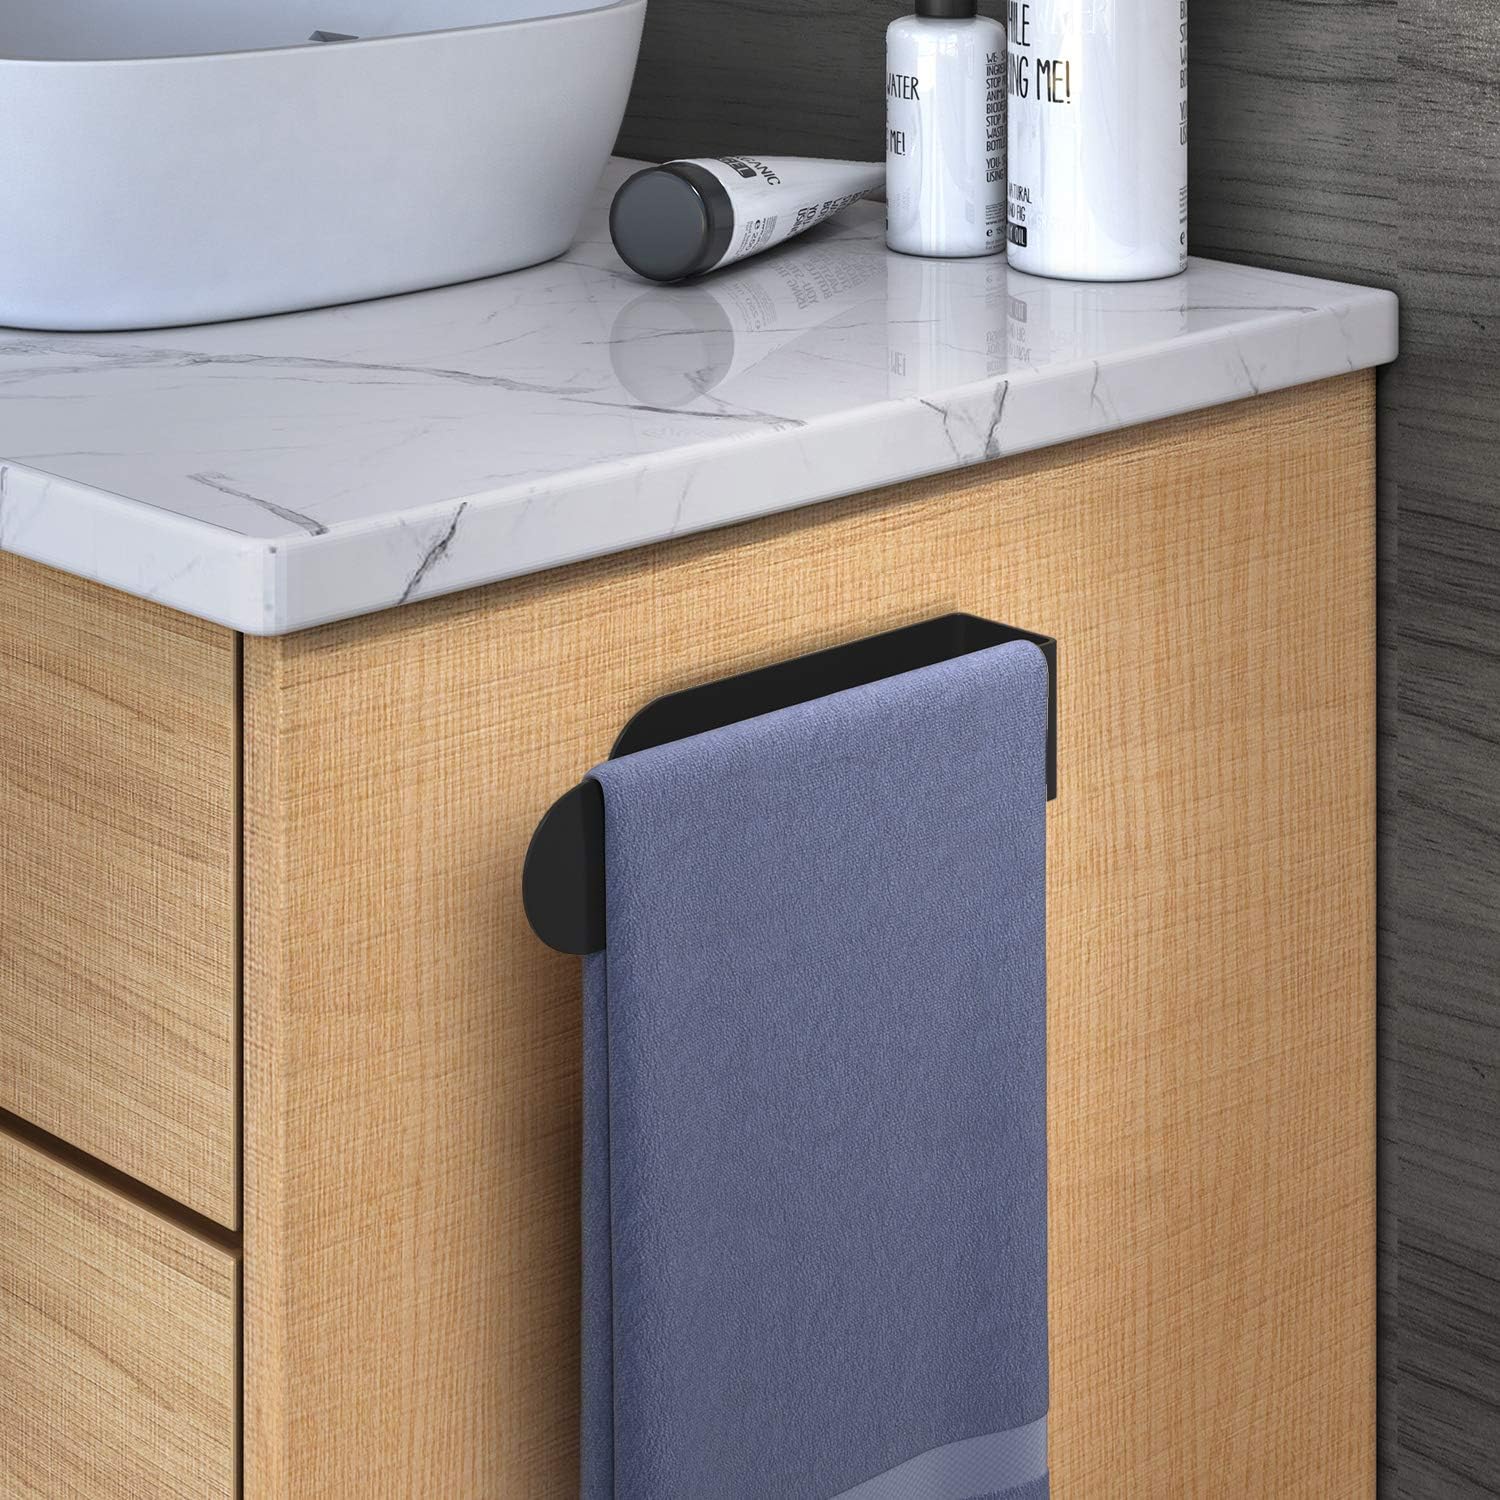 HUFEEOH Hand Towel Holder - Hand Towel Bar - Self Adhesive Bathroom Towel Bar Stick on Wall - SUS 304 Stainless Steel Brushed - Black